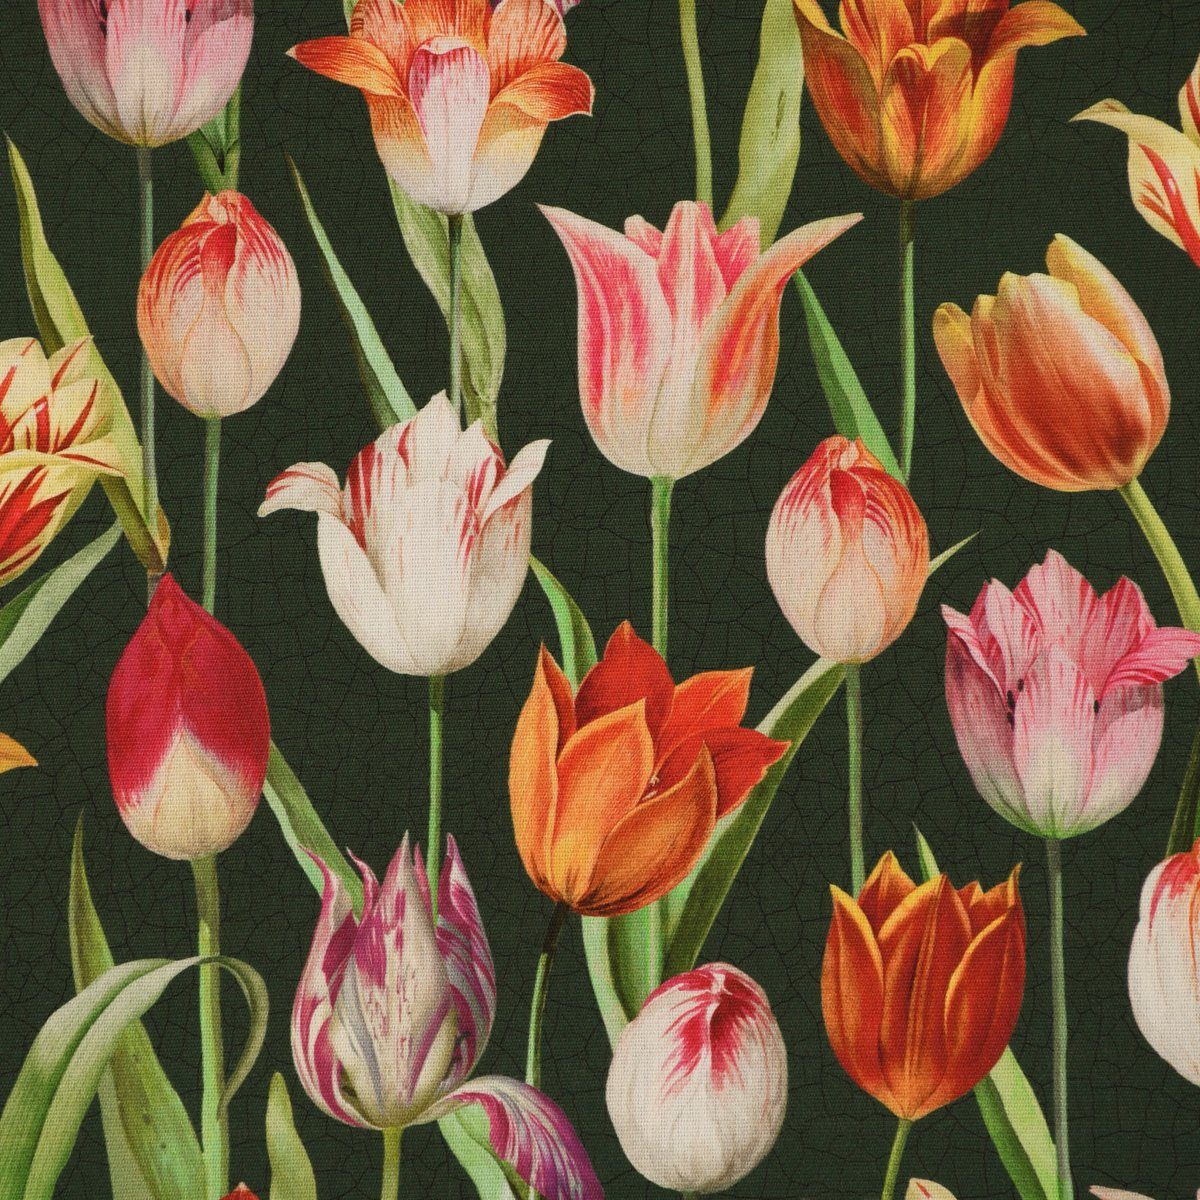 SCHÖNER LEBEN. Dekokissen SCHÖNER Tulip Tulpen Outdoor grün rot Painting Kissenhülle LEBEN